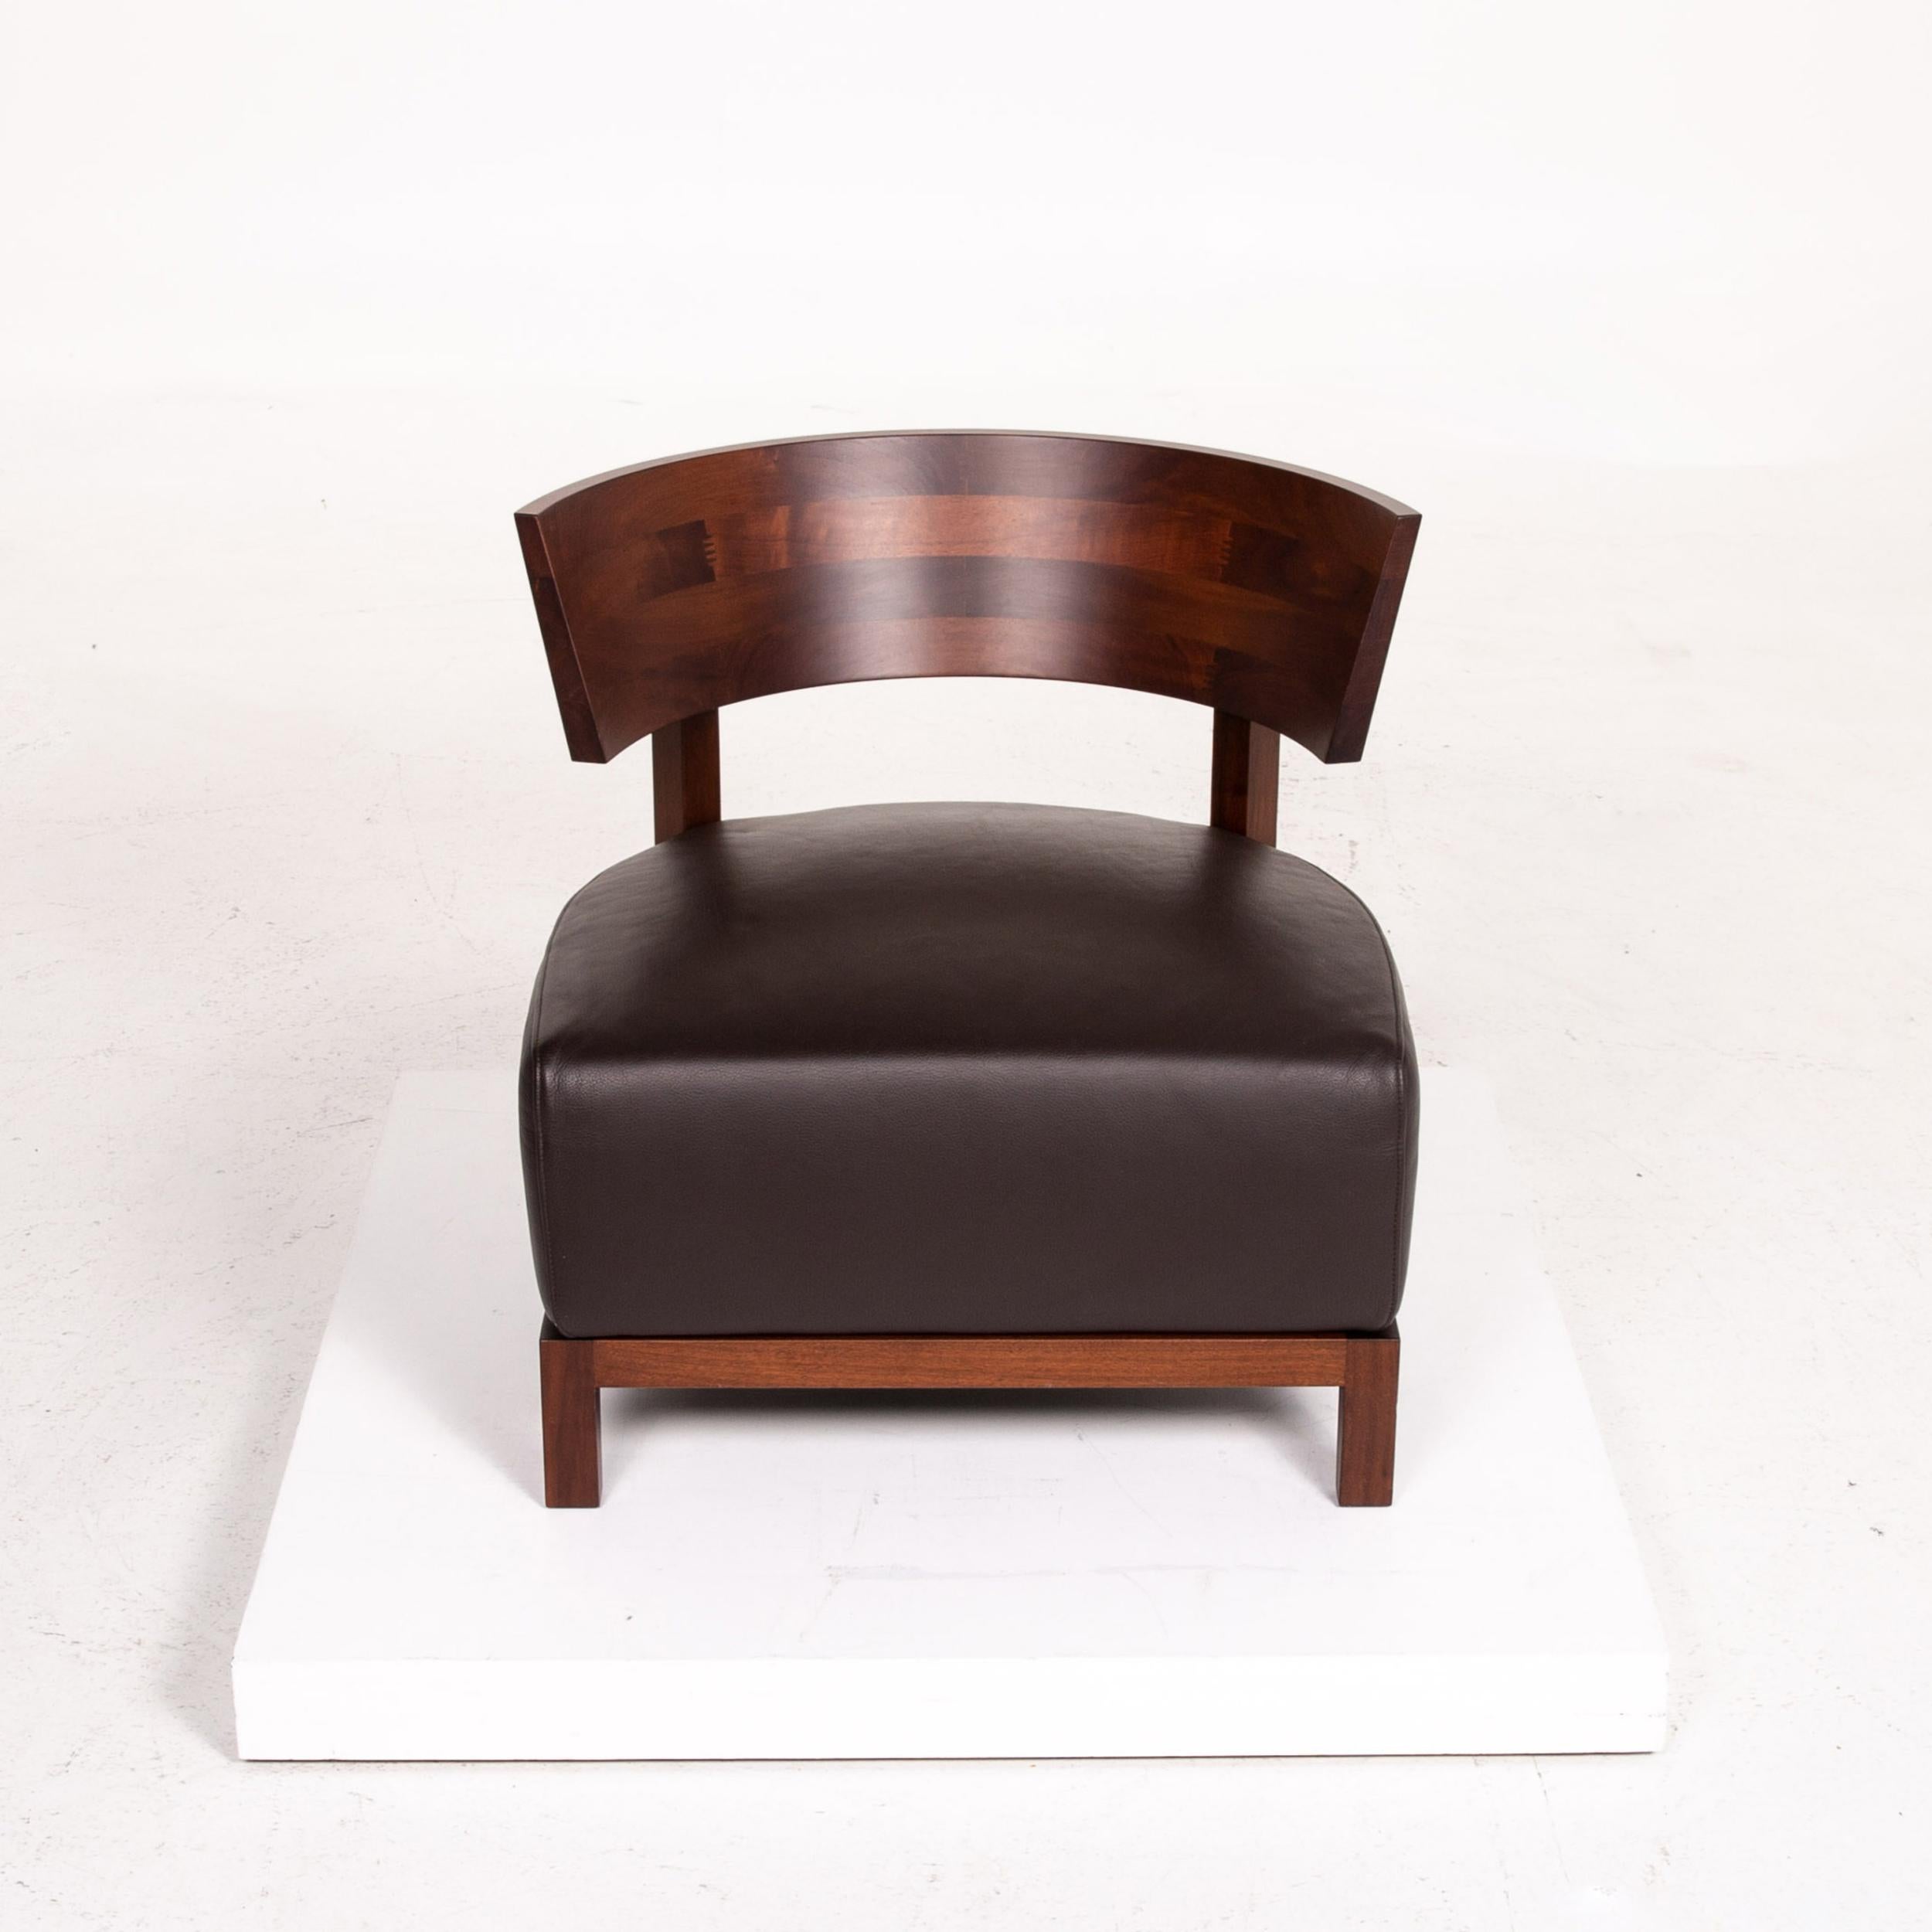 Contemporary Flexform Thomas Wood Leather Armchair Set Brown Dark Brown 2 Chair Antonio